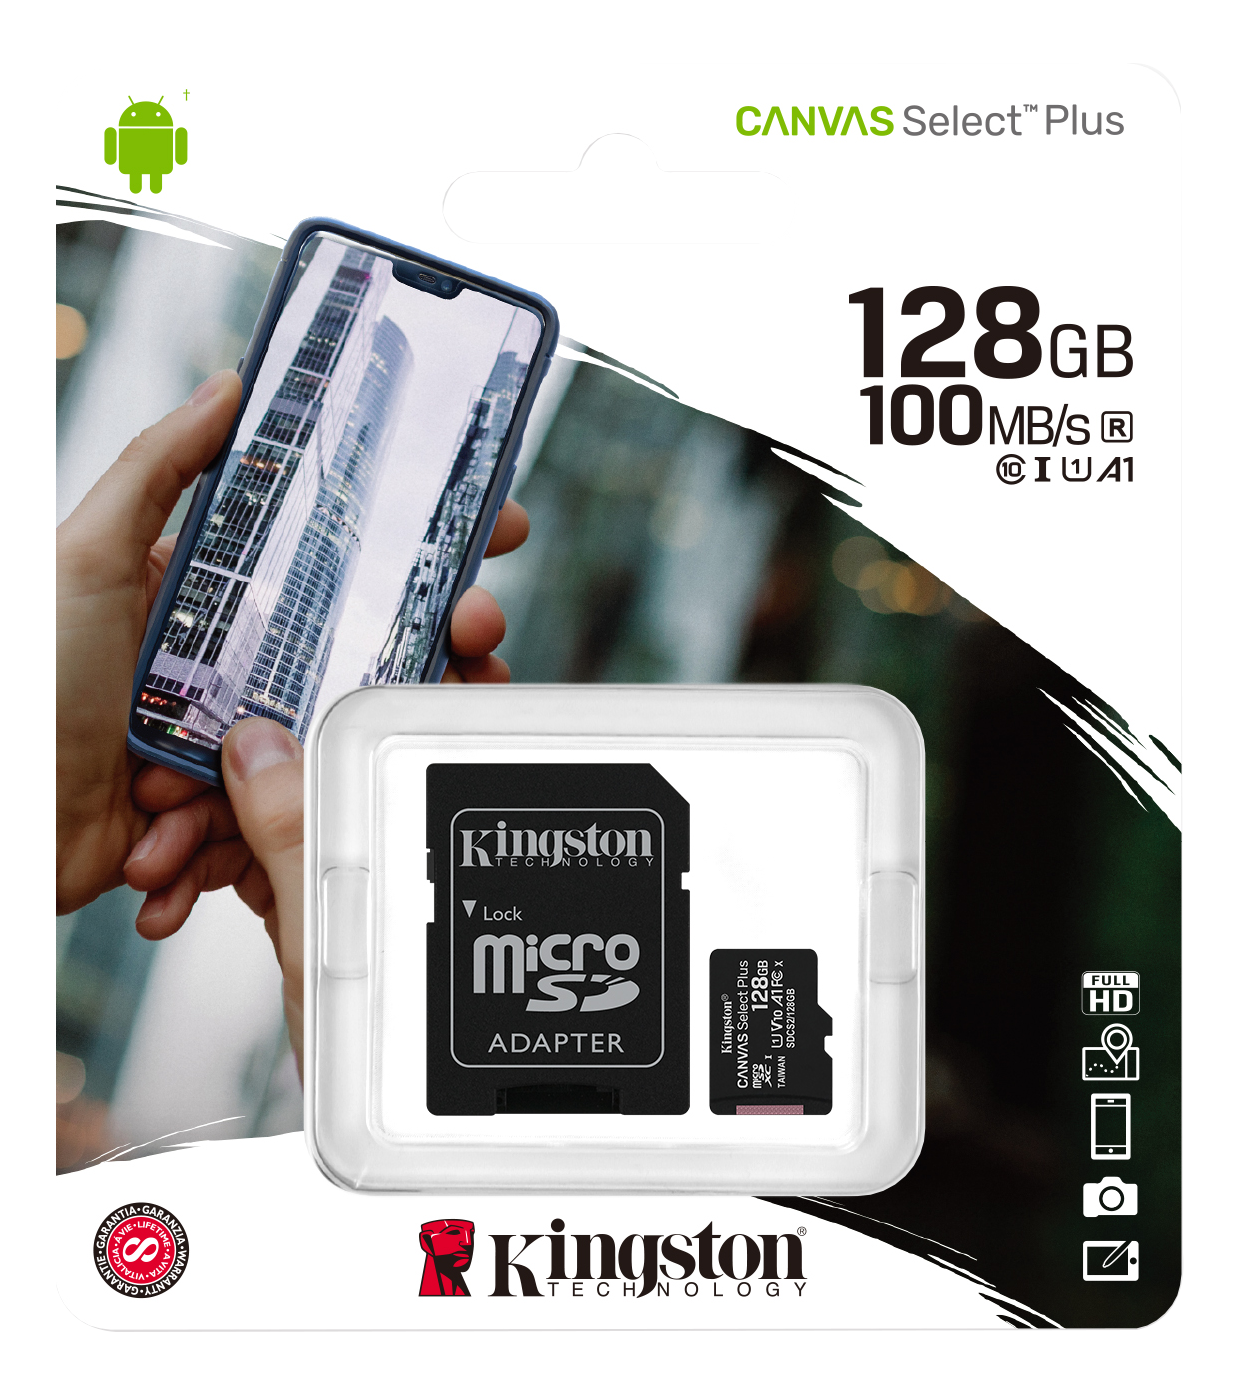 Rejse Tilmeld klynke Kingston Canvas Select Plus 128 GB - Micro SD-kort til droner - 4K